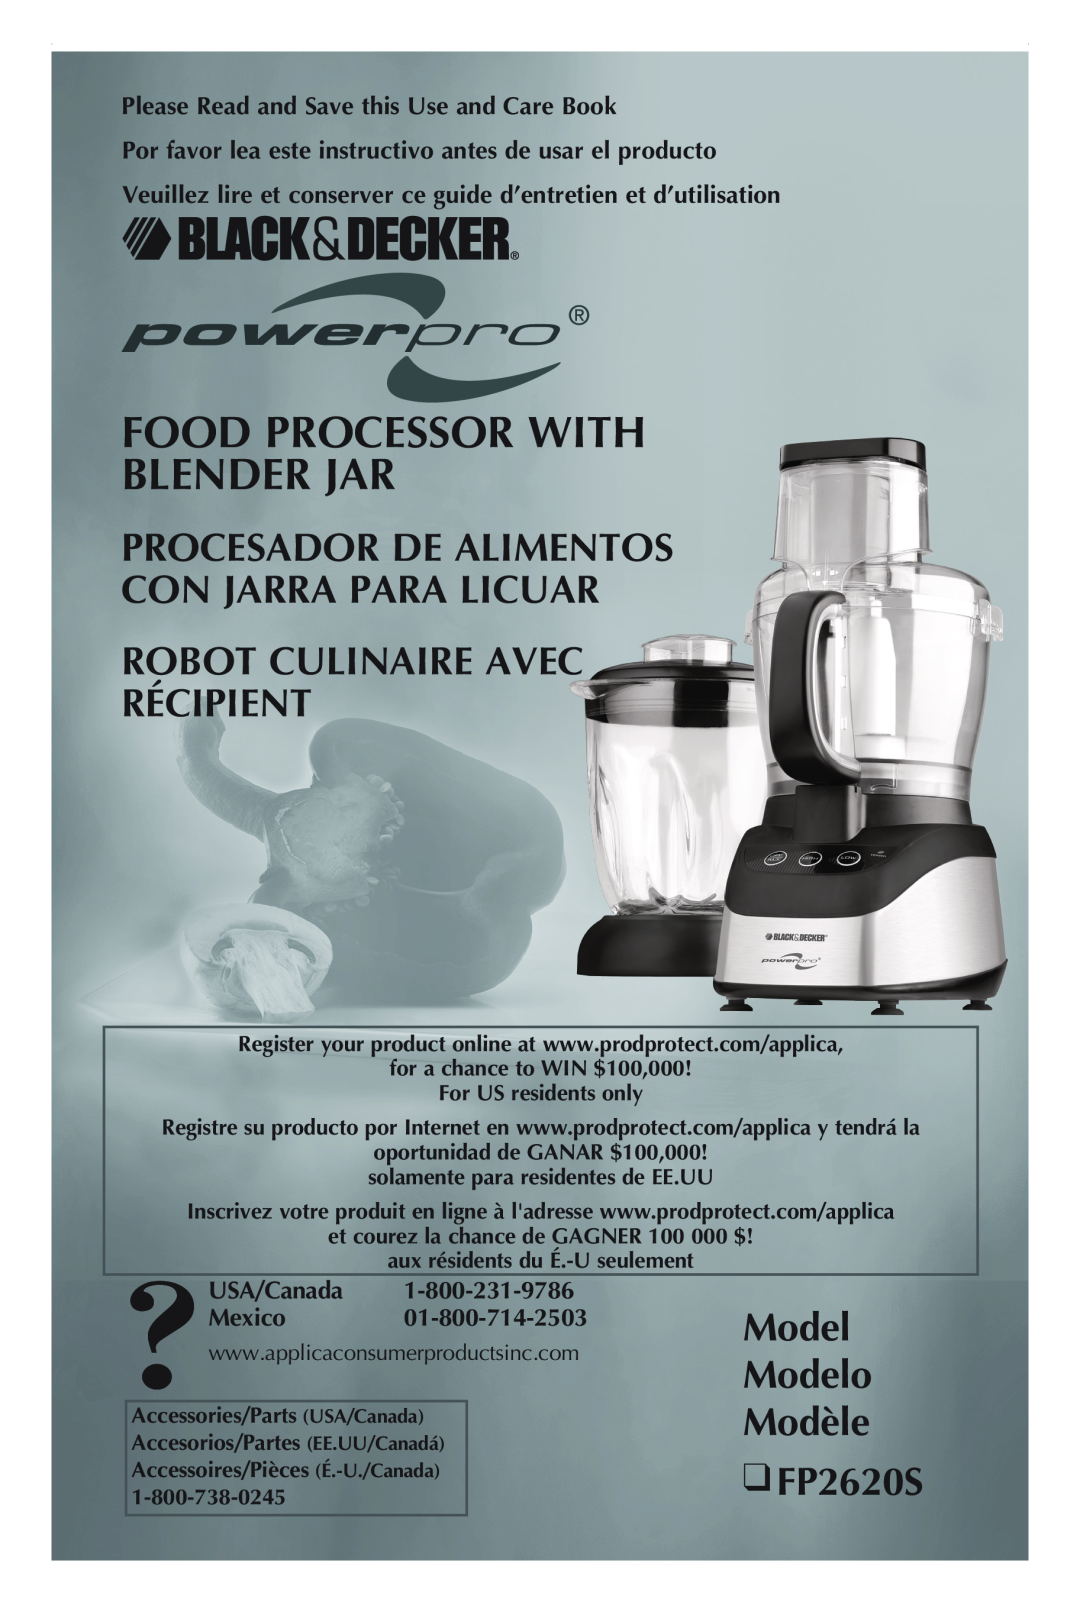 Black & Decker manual Food Processor With Blender Jar, Récipient, Model Modelo Modèle FP2620S, USA/Canada Mexico 